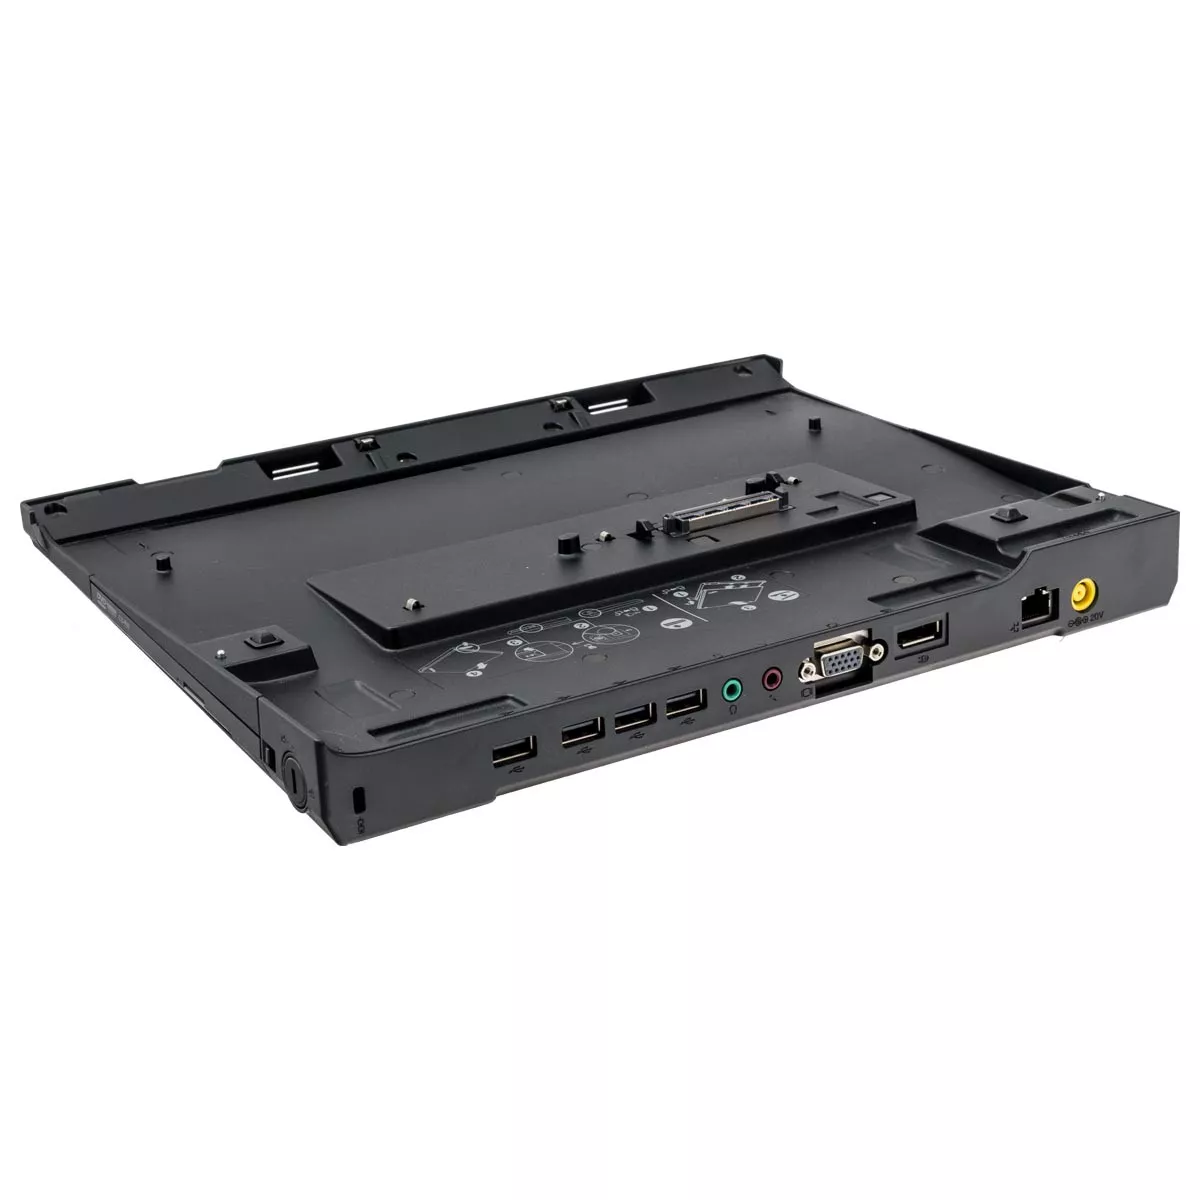 Ultrabase ThinkPad Serie 3 X220 / X230 mit DVD-RW